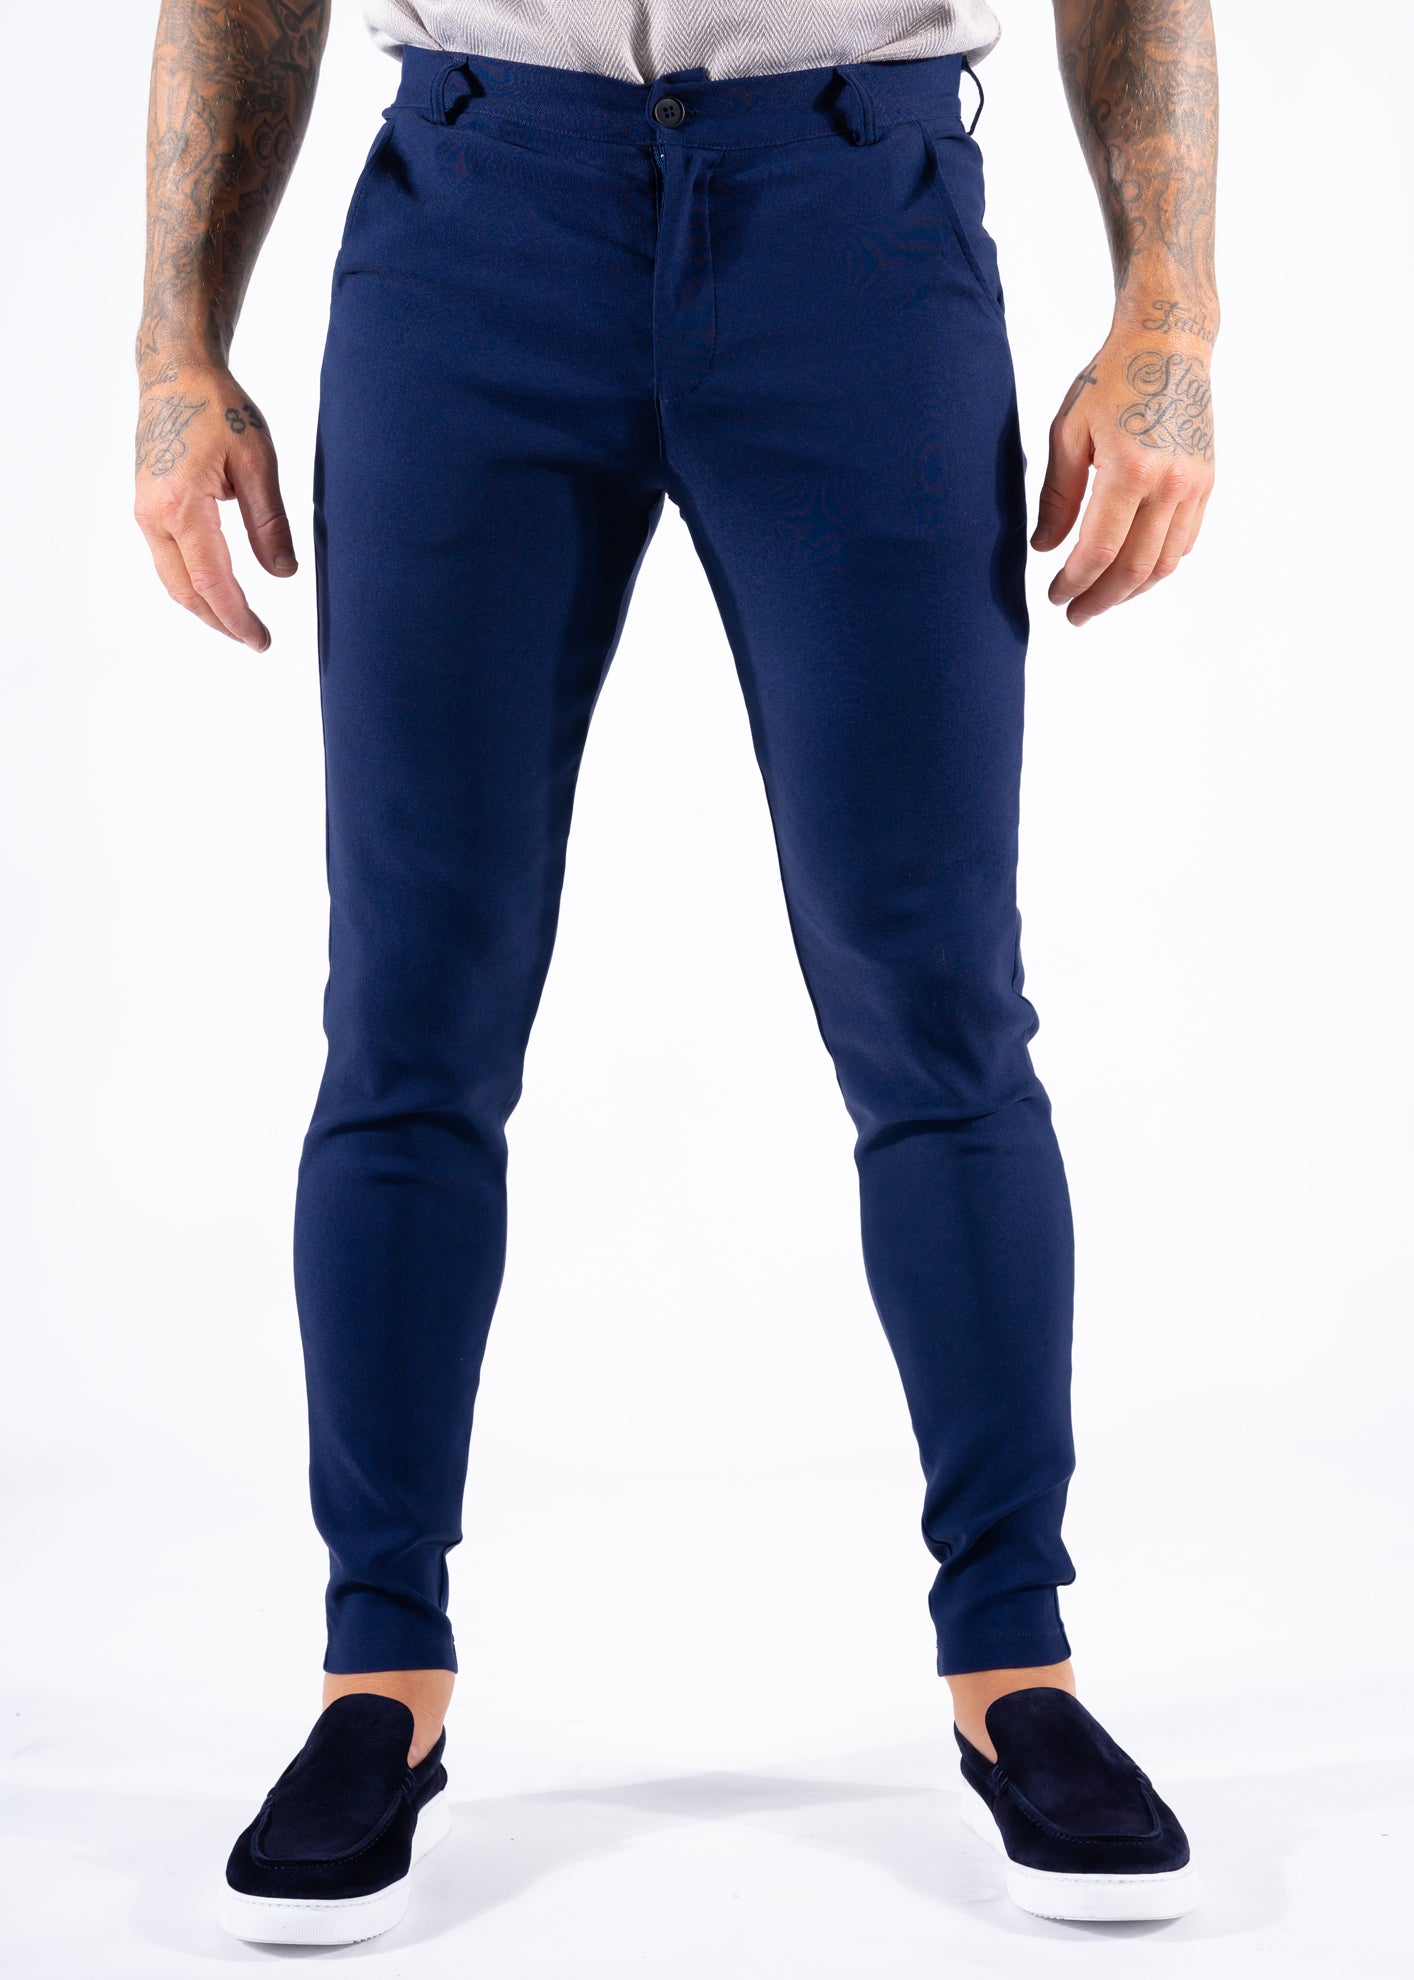 Super stretch pantalon dark blue